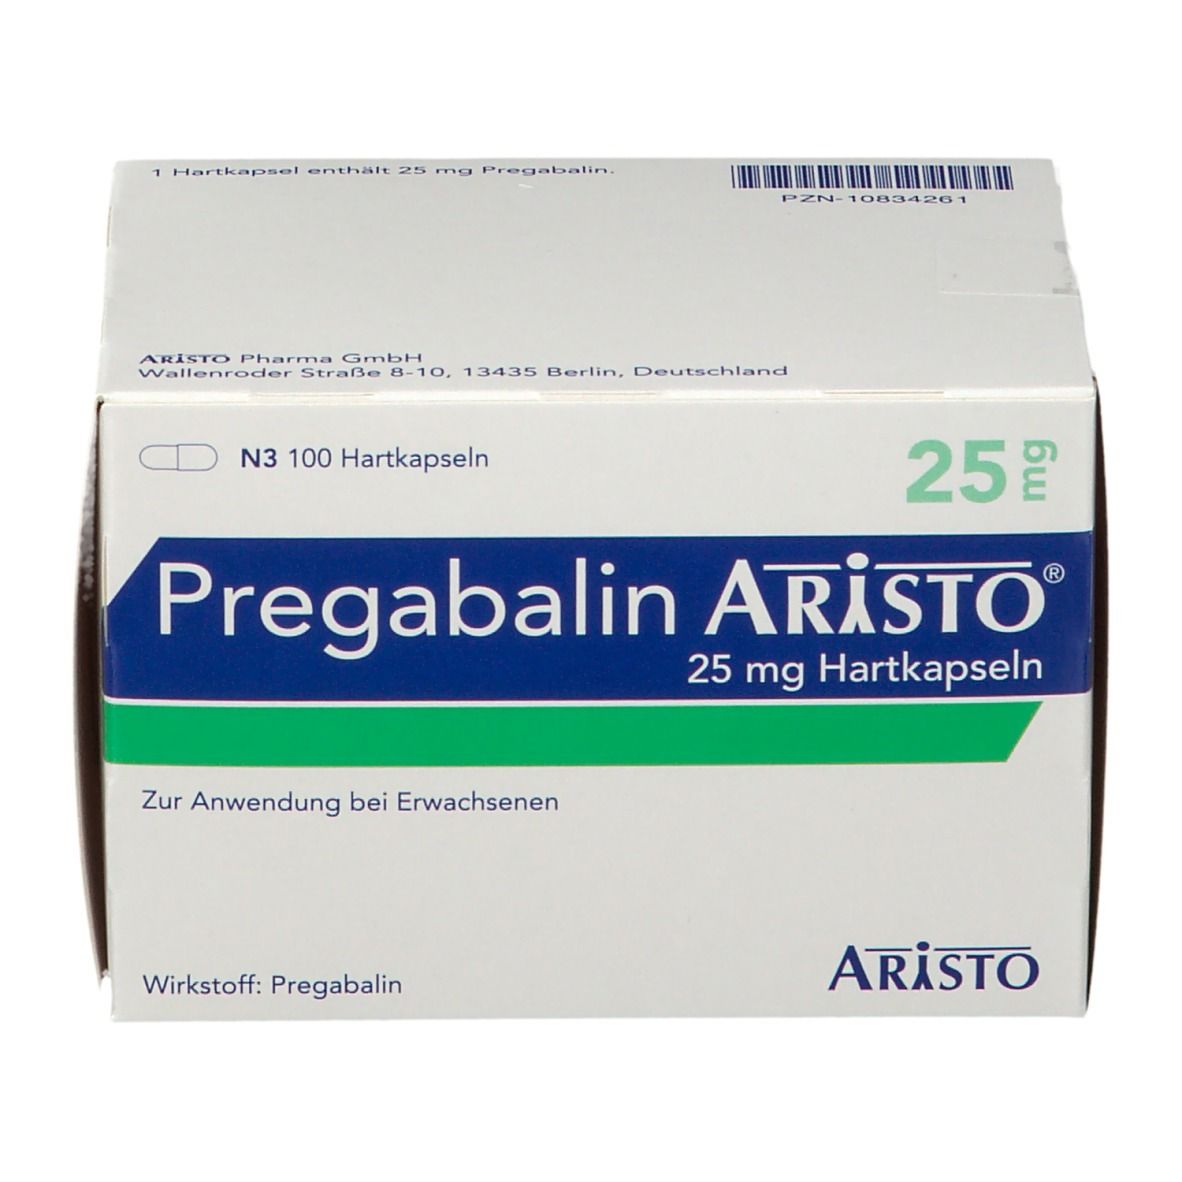 Pregabalin Aristo® 25 mg